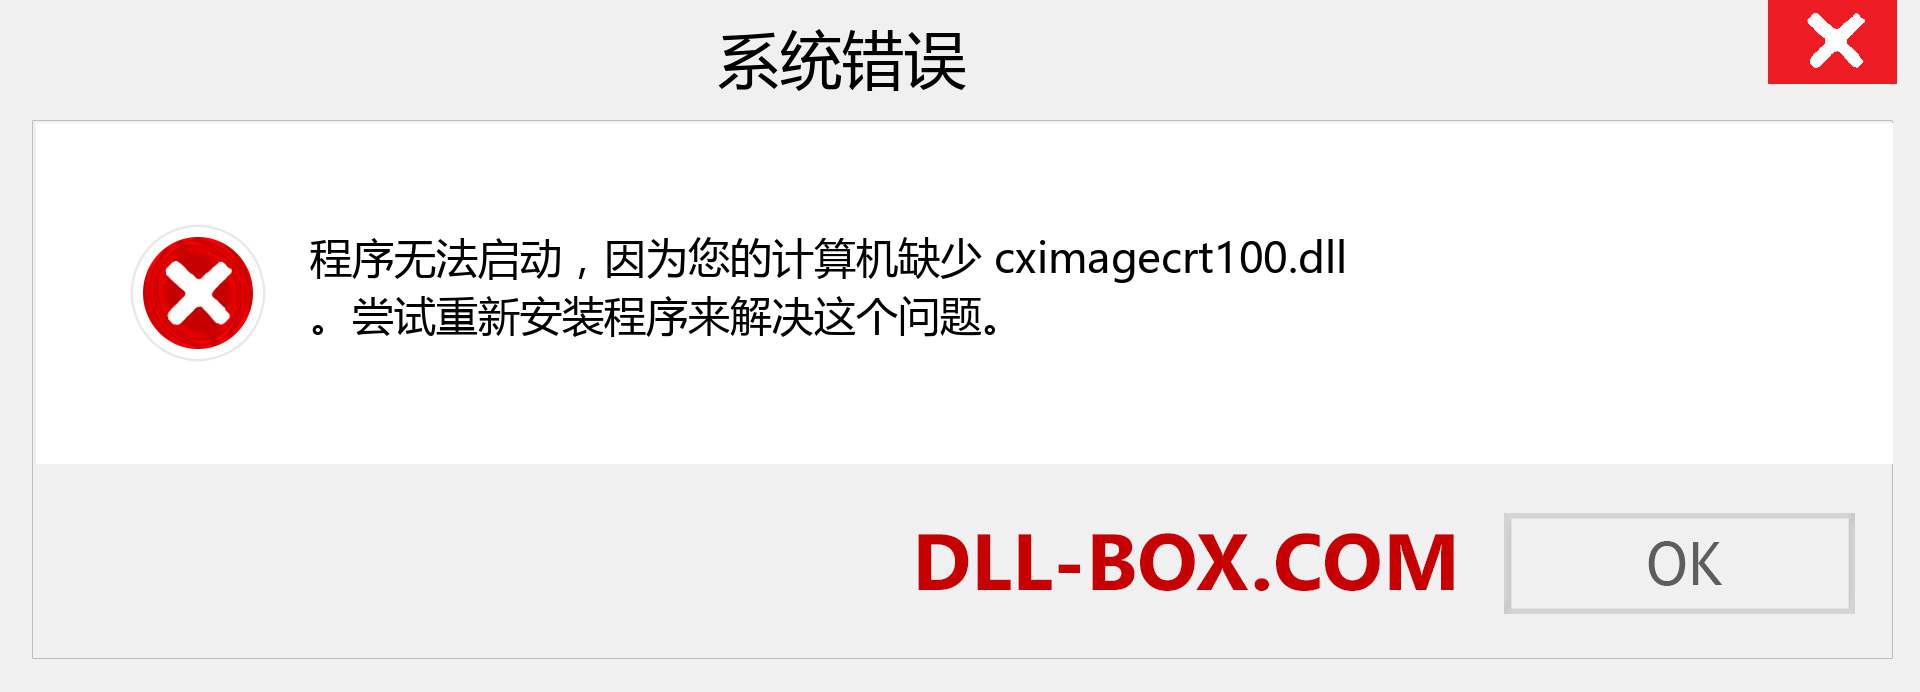 cximagecrt100.dll 文件丢失？。 适用于 Windows 7、8、10 的下载 - 修复 Windows、照片、图像上的 cximagecrt100 dll 丢失错误